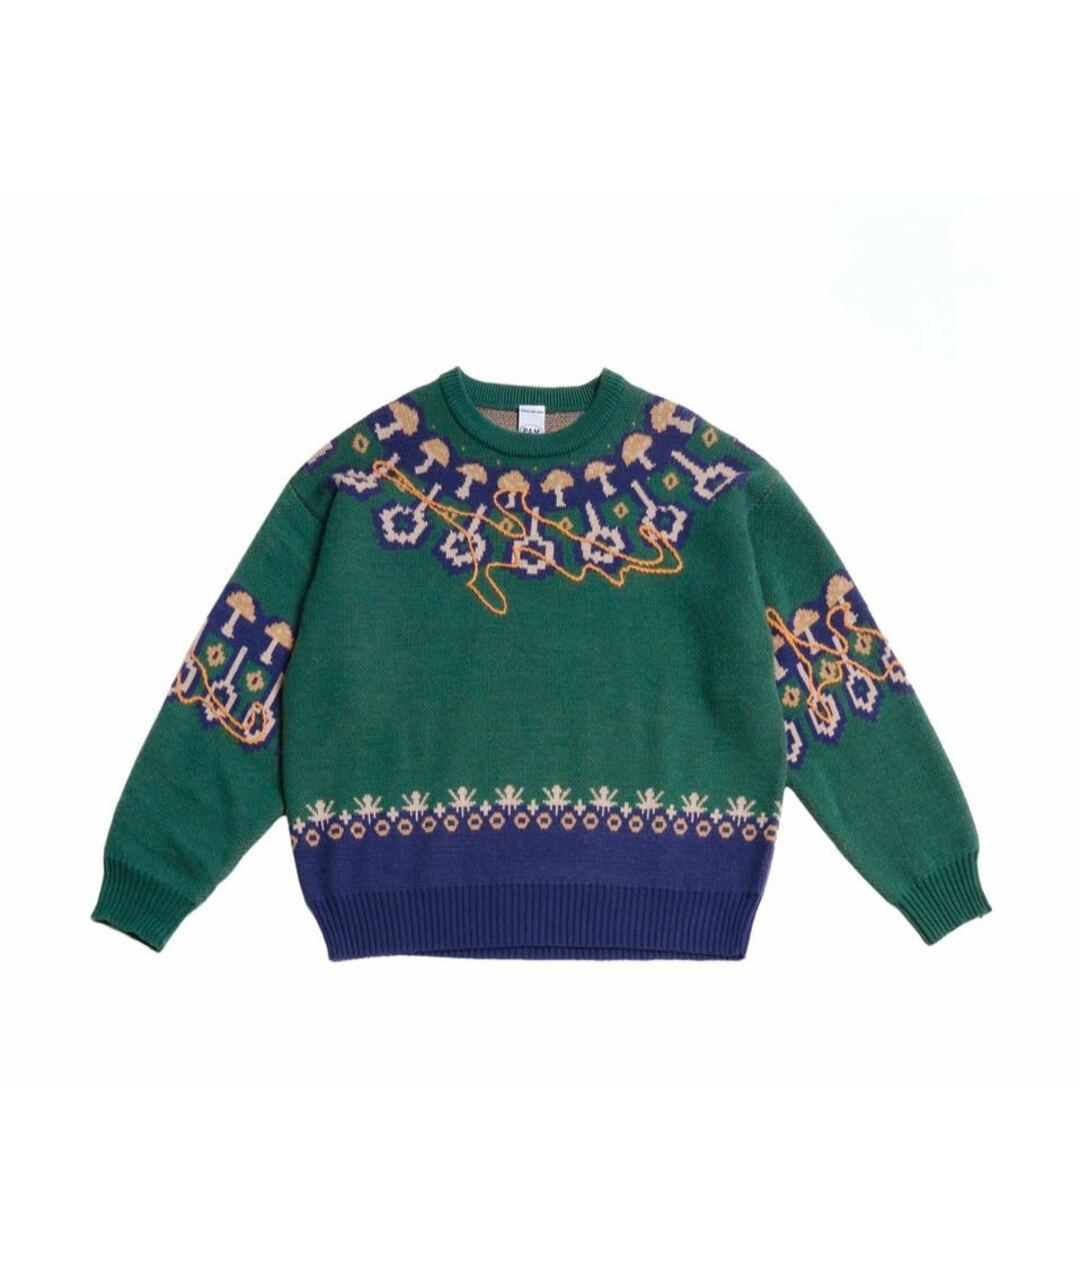 Perks and Mini Зеленый шерстяной джемпер / свитер, фото 1